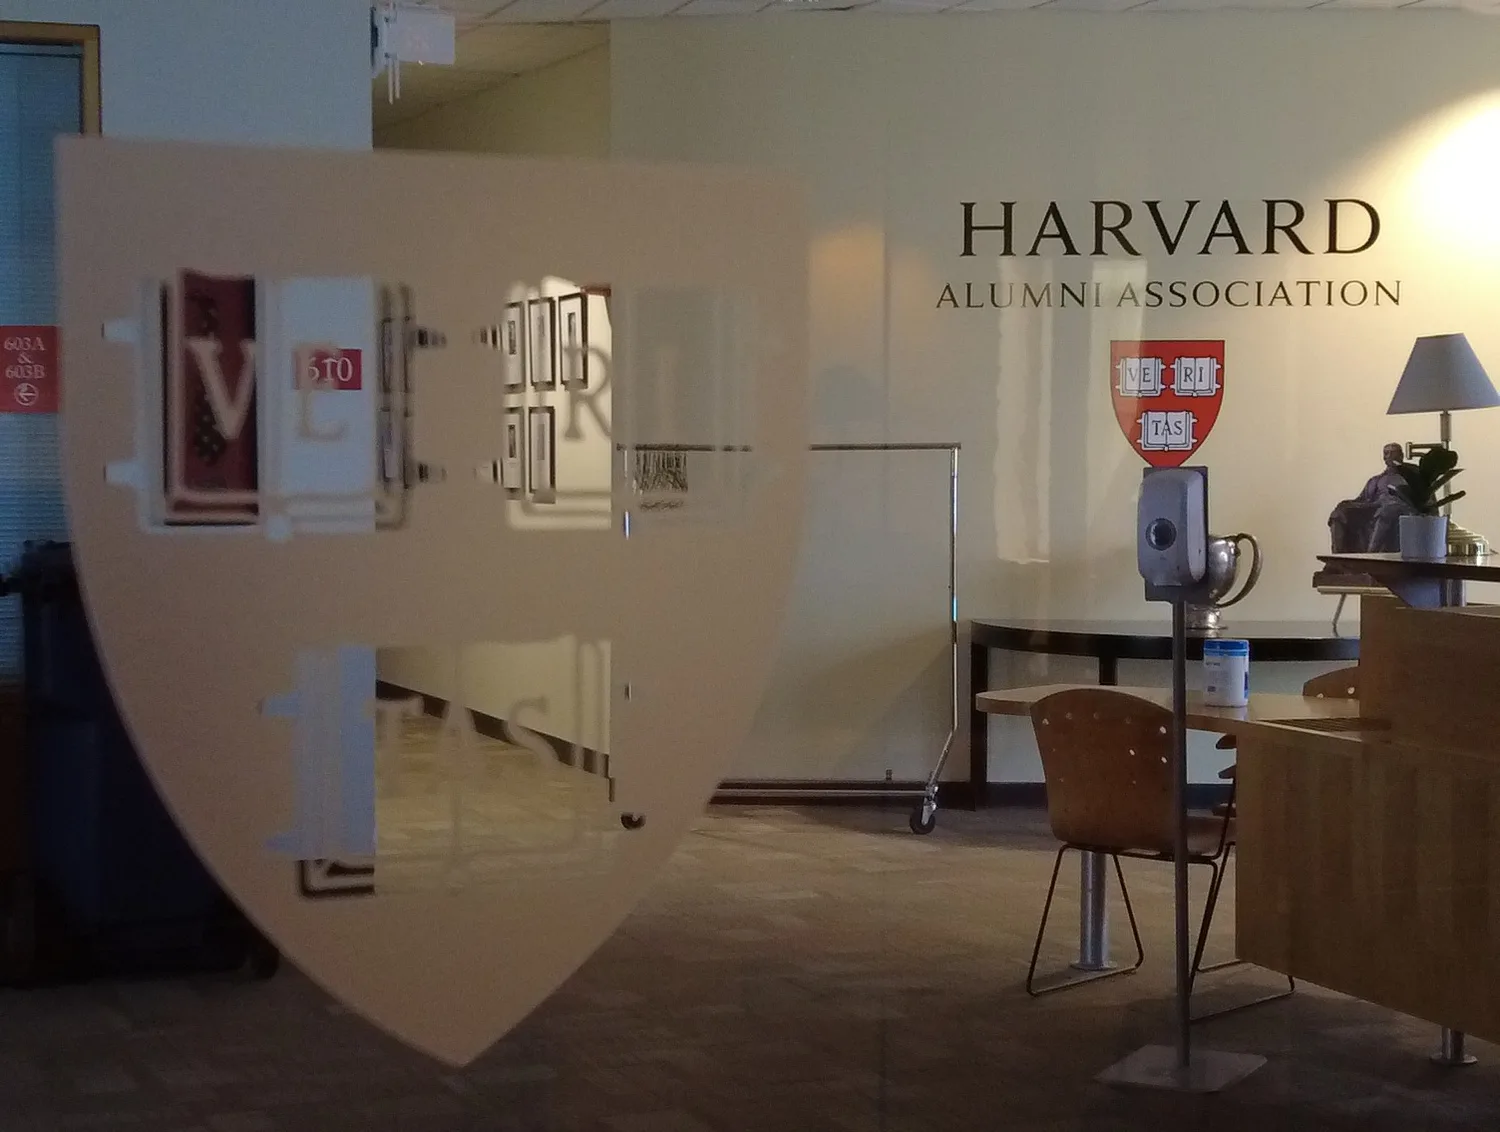 The Harvard Alumni Association office is located at 124 Mount Auburn St.